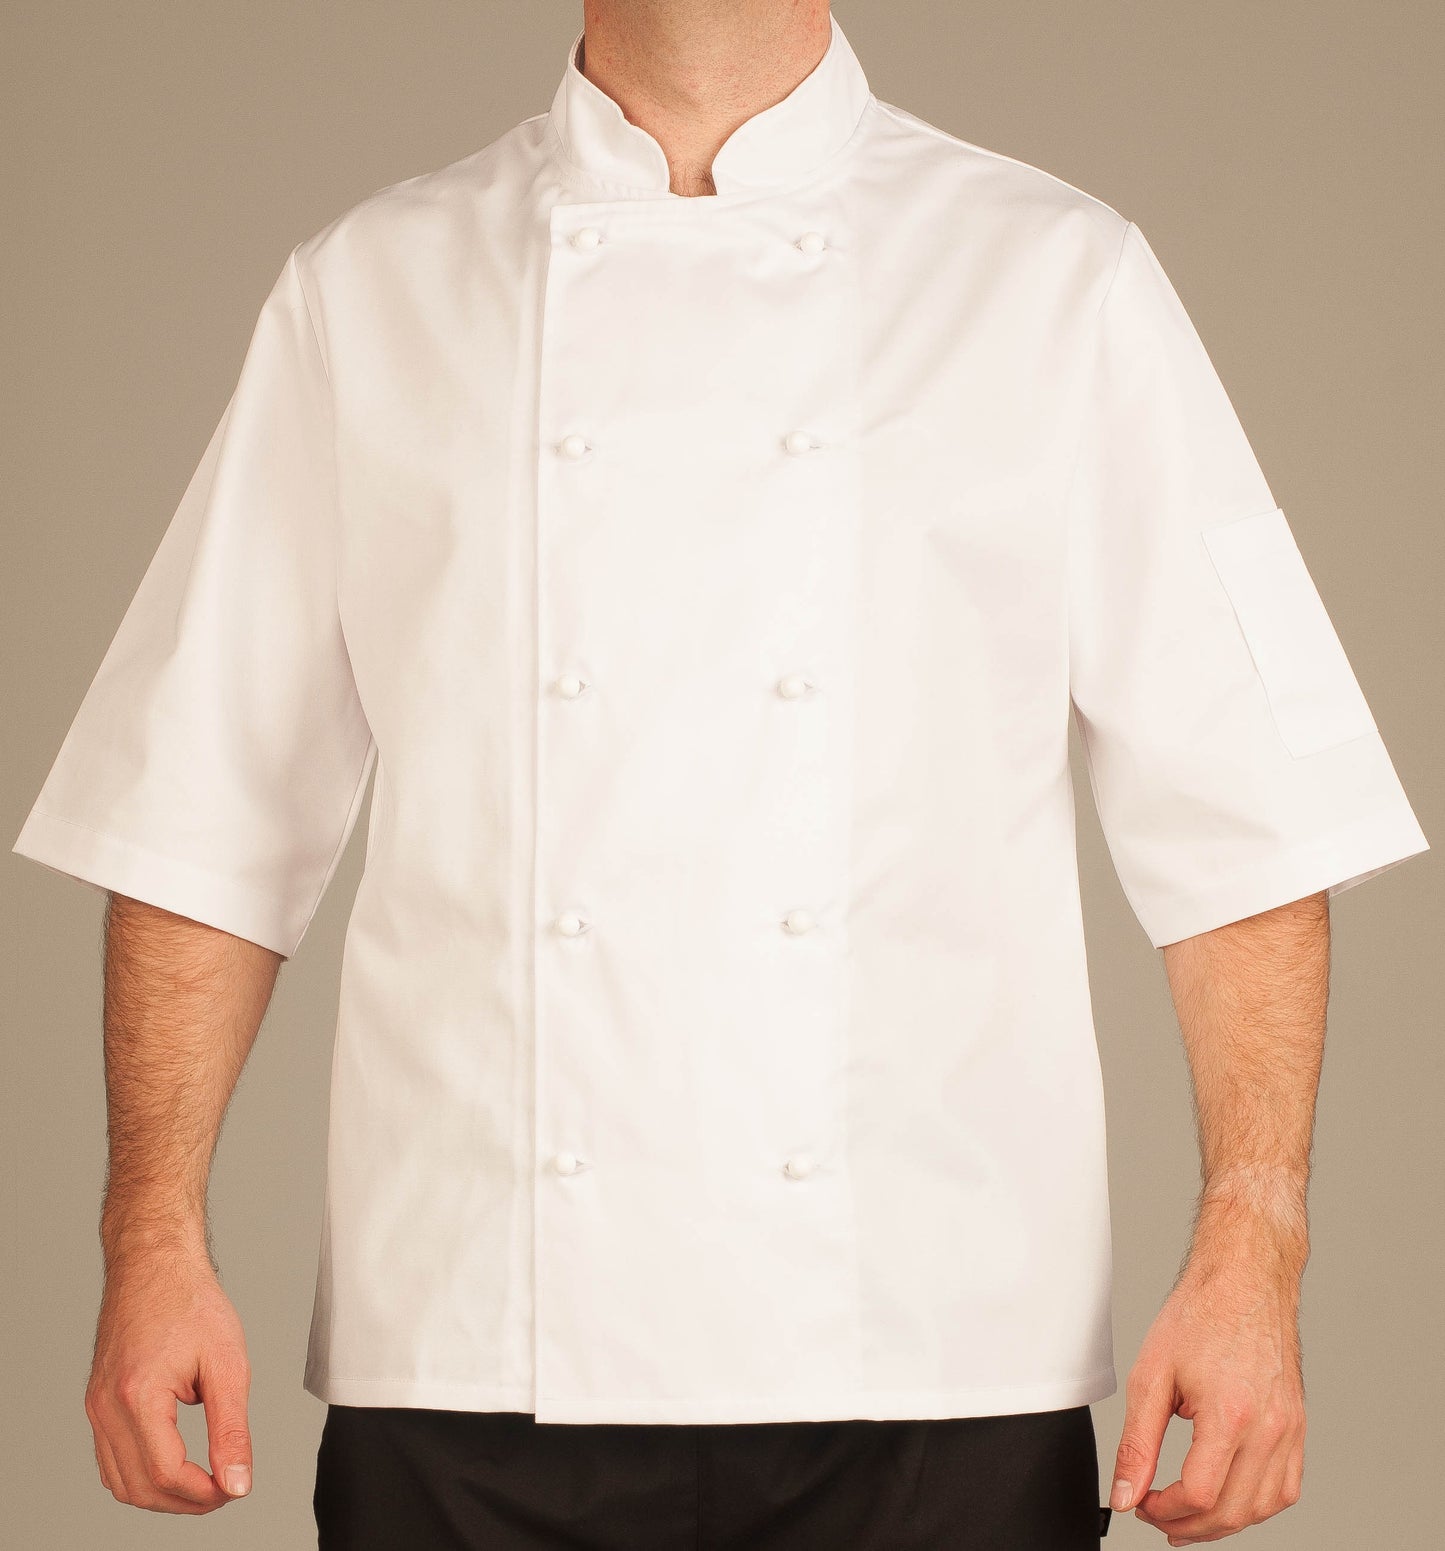 James Chef Jacket - Short Sleeves black or white